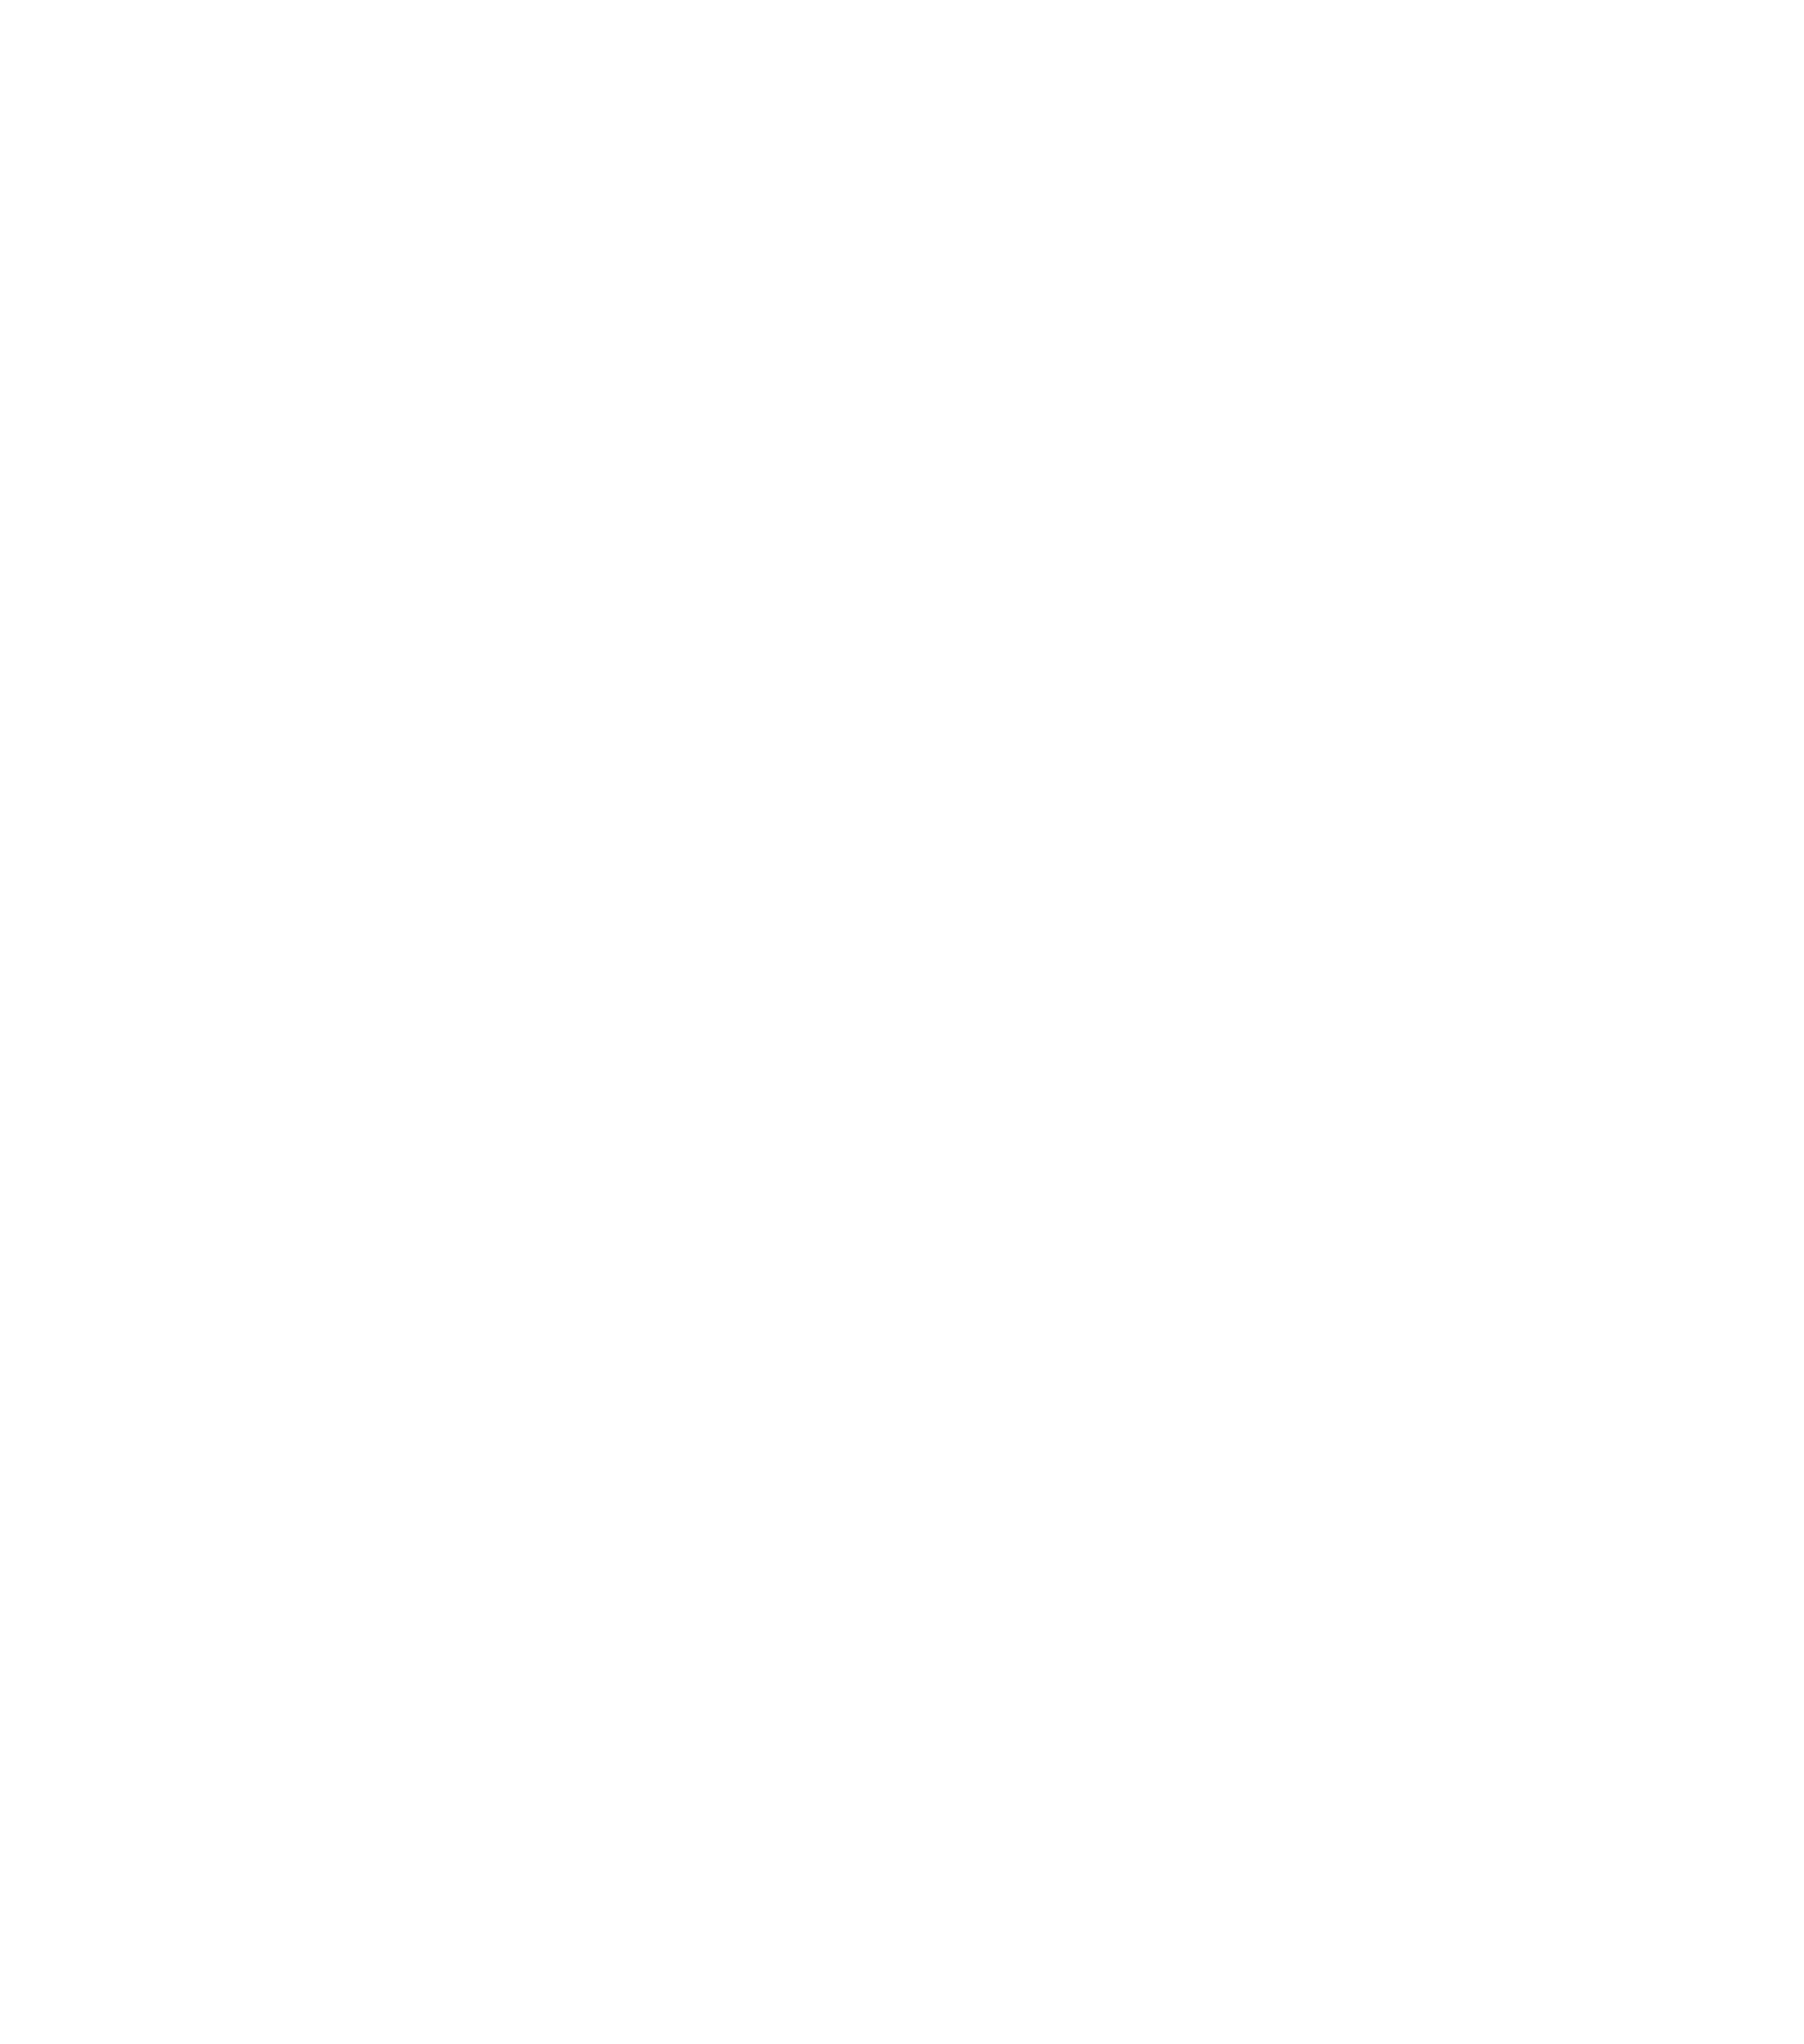 Mirara and Associates LLP